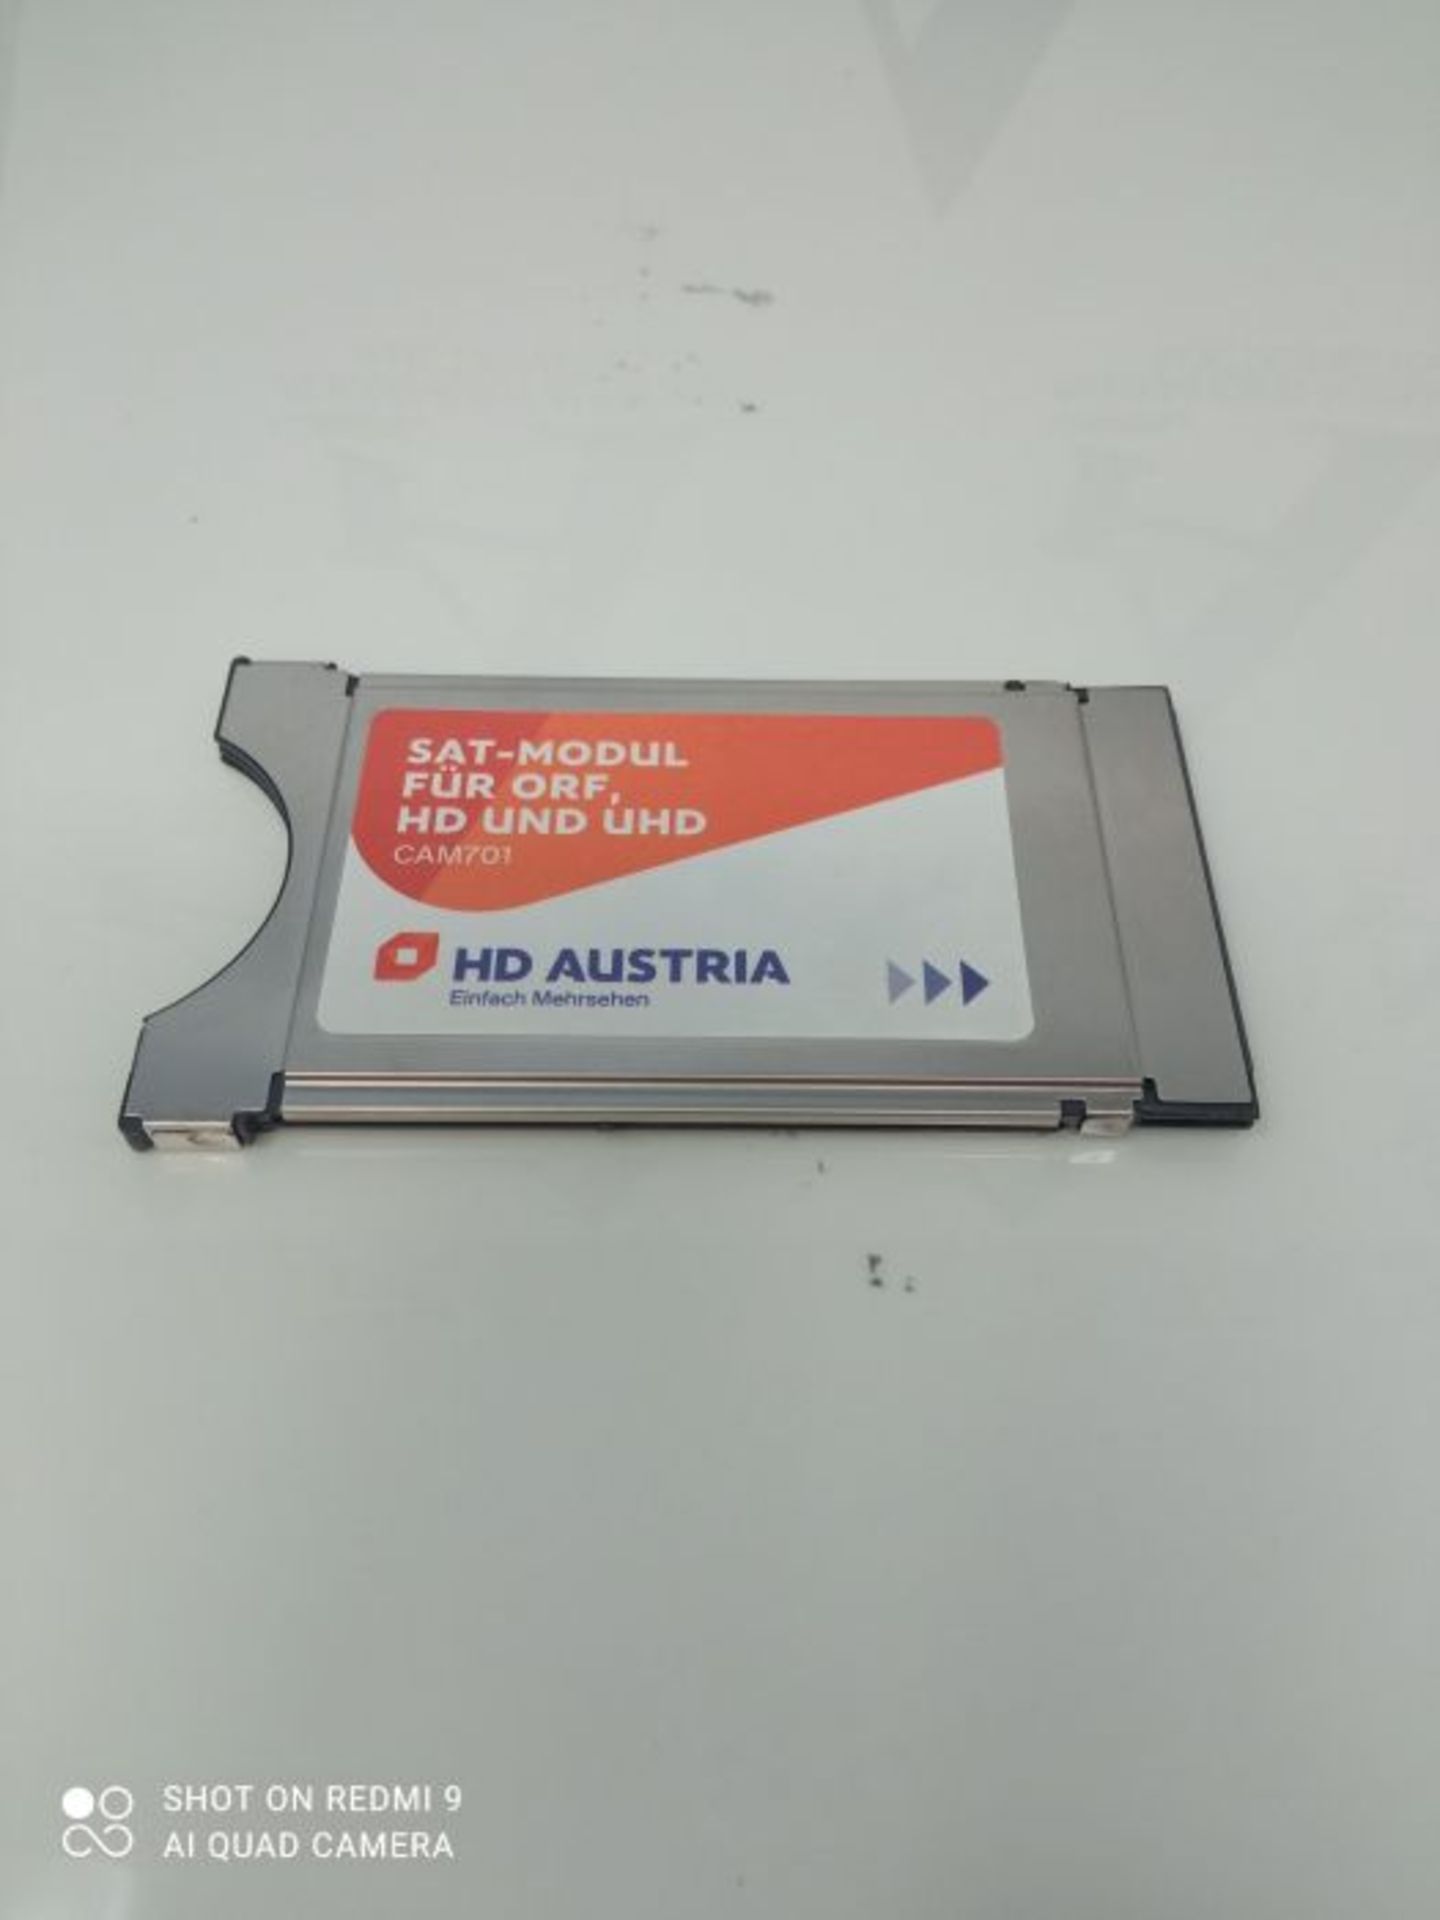 RRP £62.00 HD Austria CI Modul CAM701 HD Karte (ORF HD, ATV HD, PULS 4 HD, ORF-Freischaltung, üb